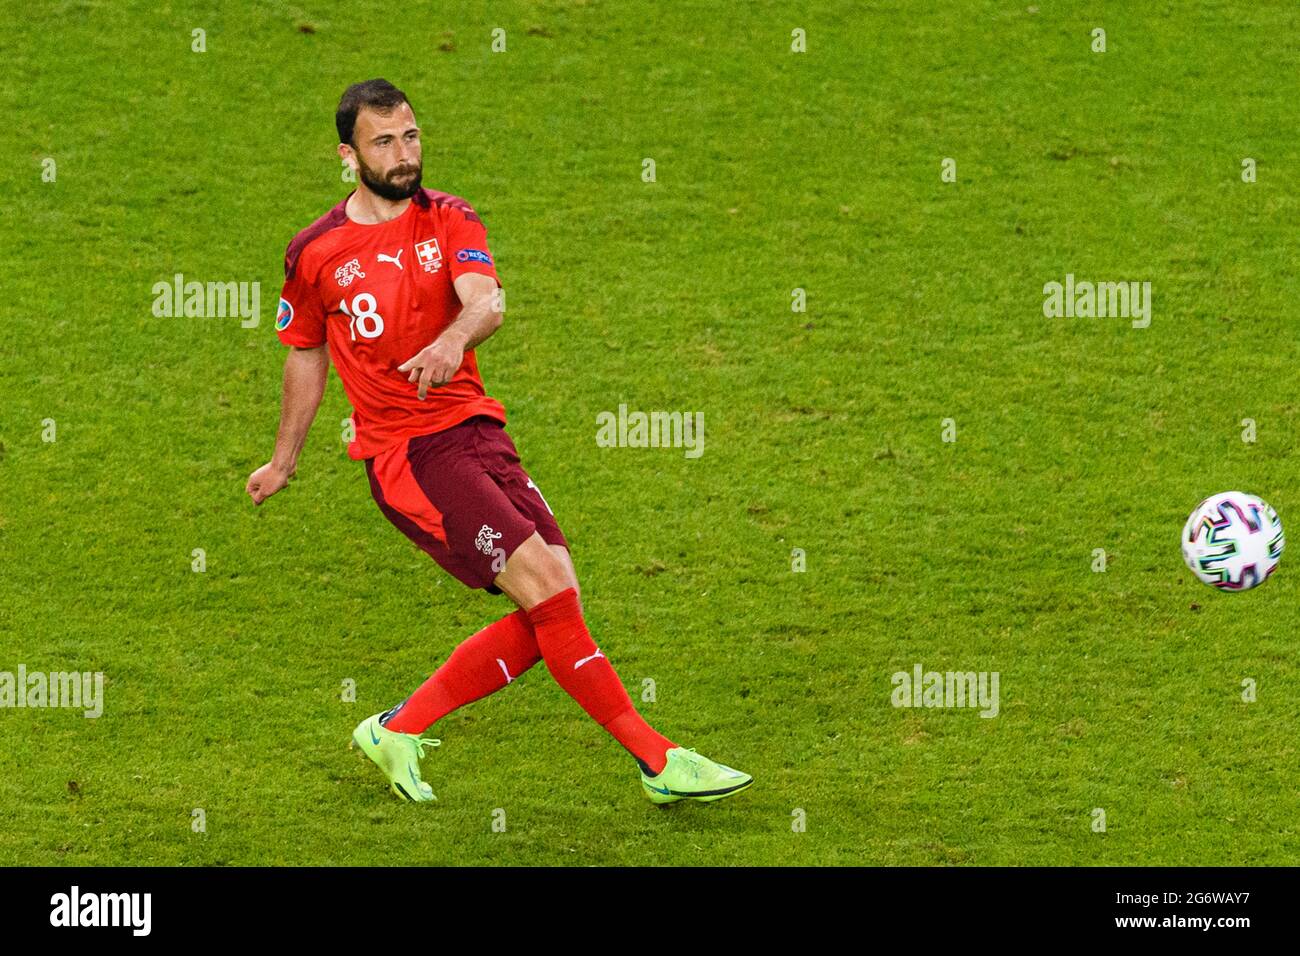 Baku, Azerbaijan - June 20: Admir Mehmedi of Switzerland looks to bring the ball down during the UEFA Euro 2020 Championship Group A match between Swi Stock Photo